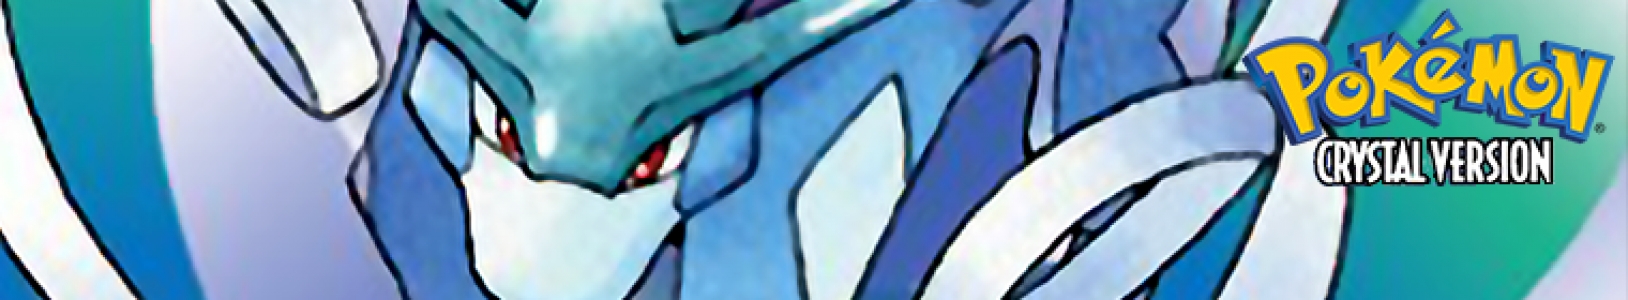 Pokémon Crystal Version banner